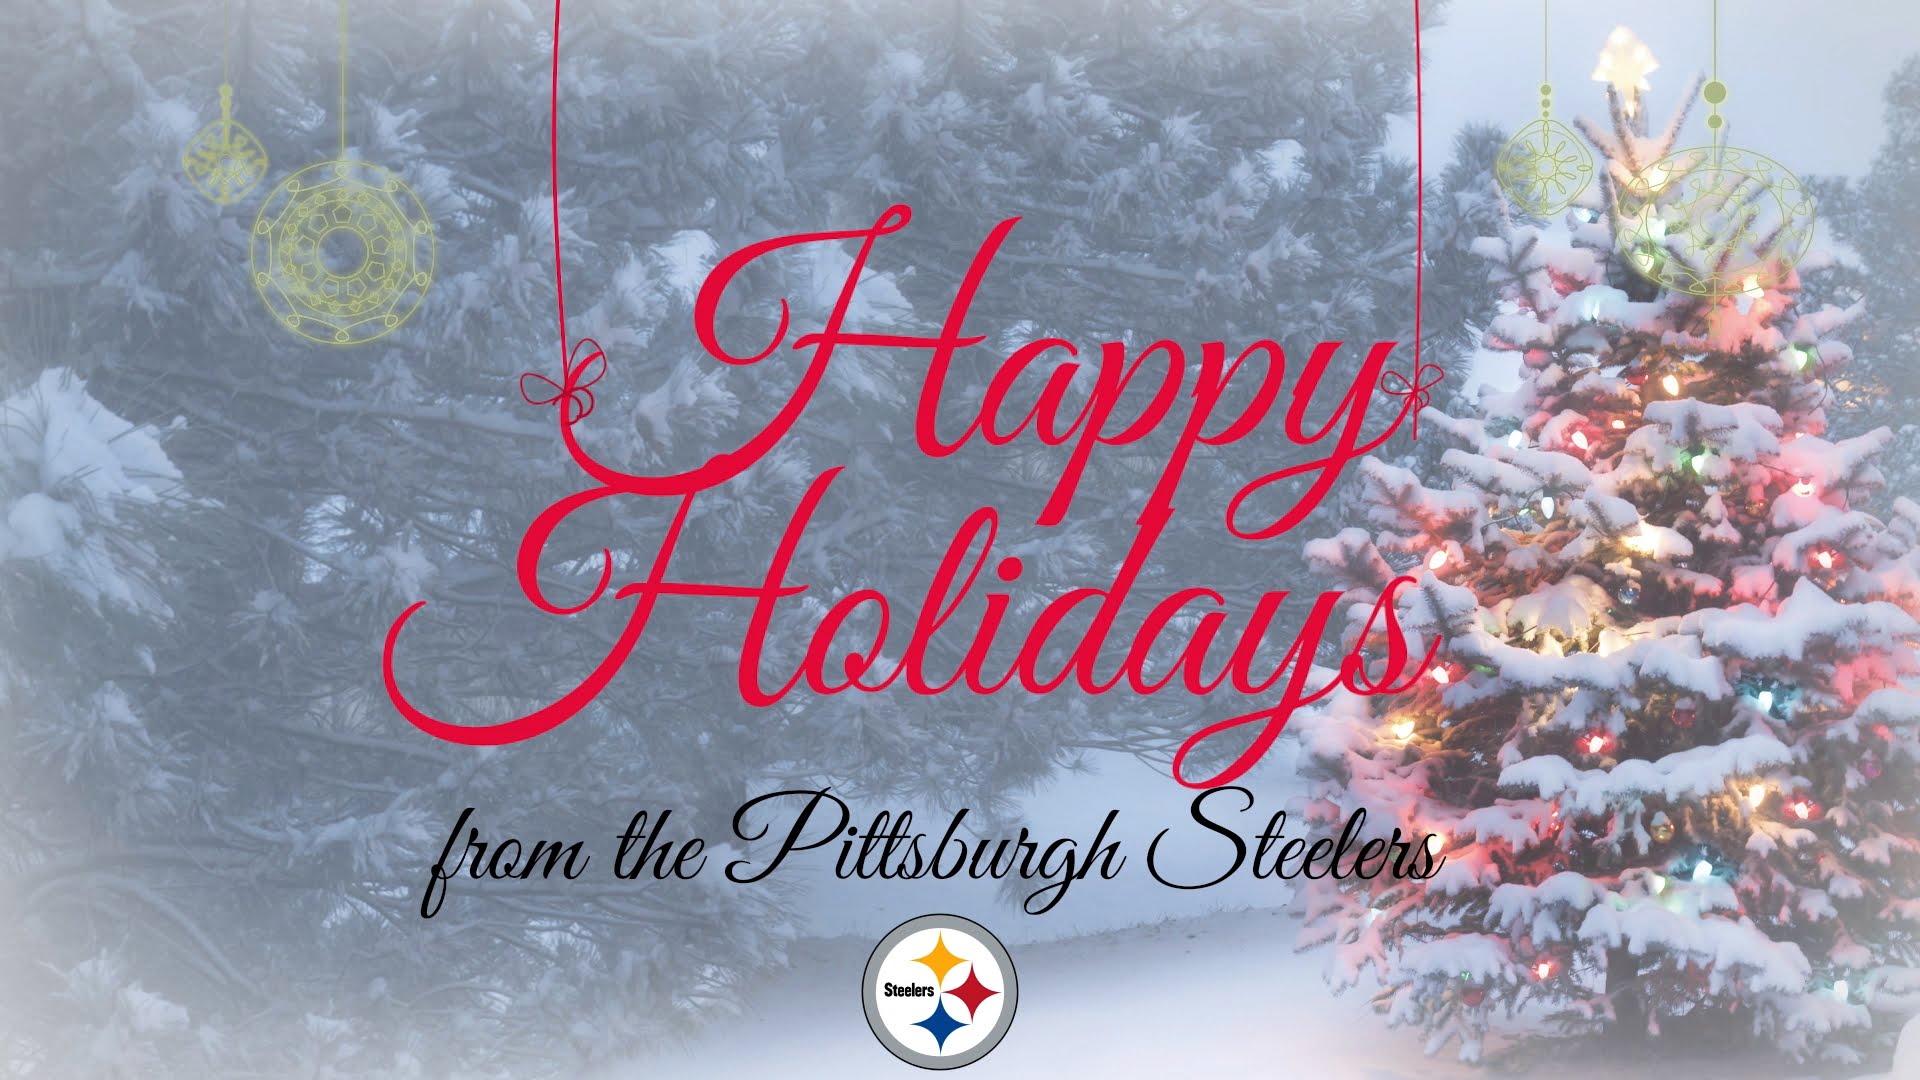 Pittsburgh Steelers sing a Christmas Carol